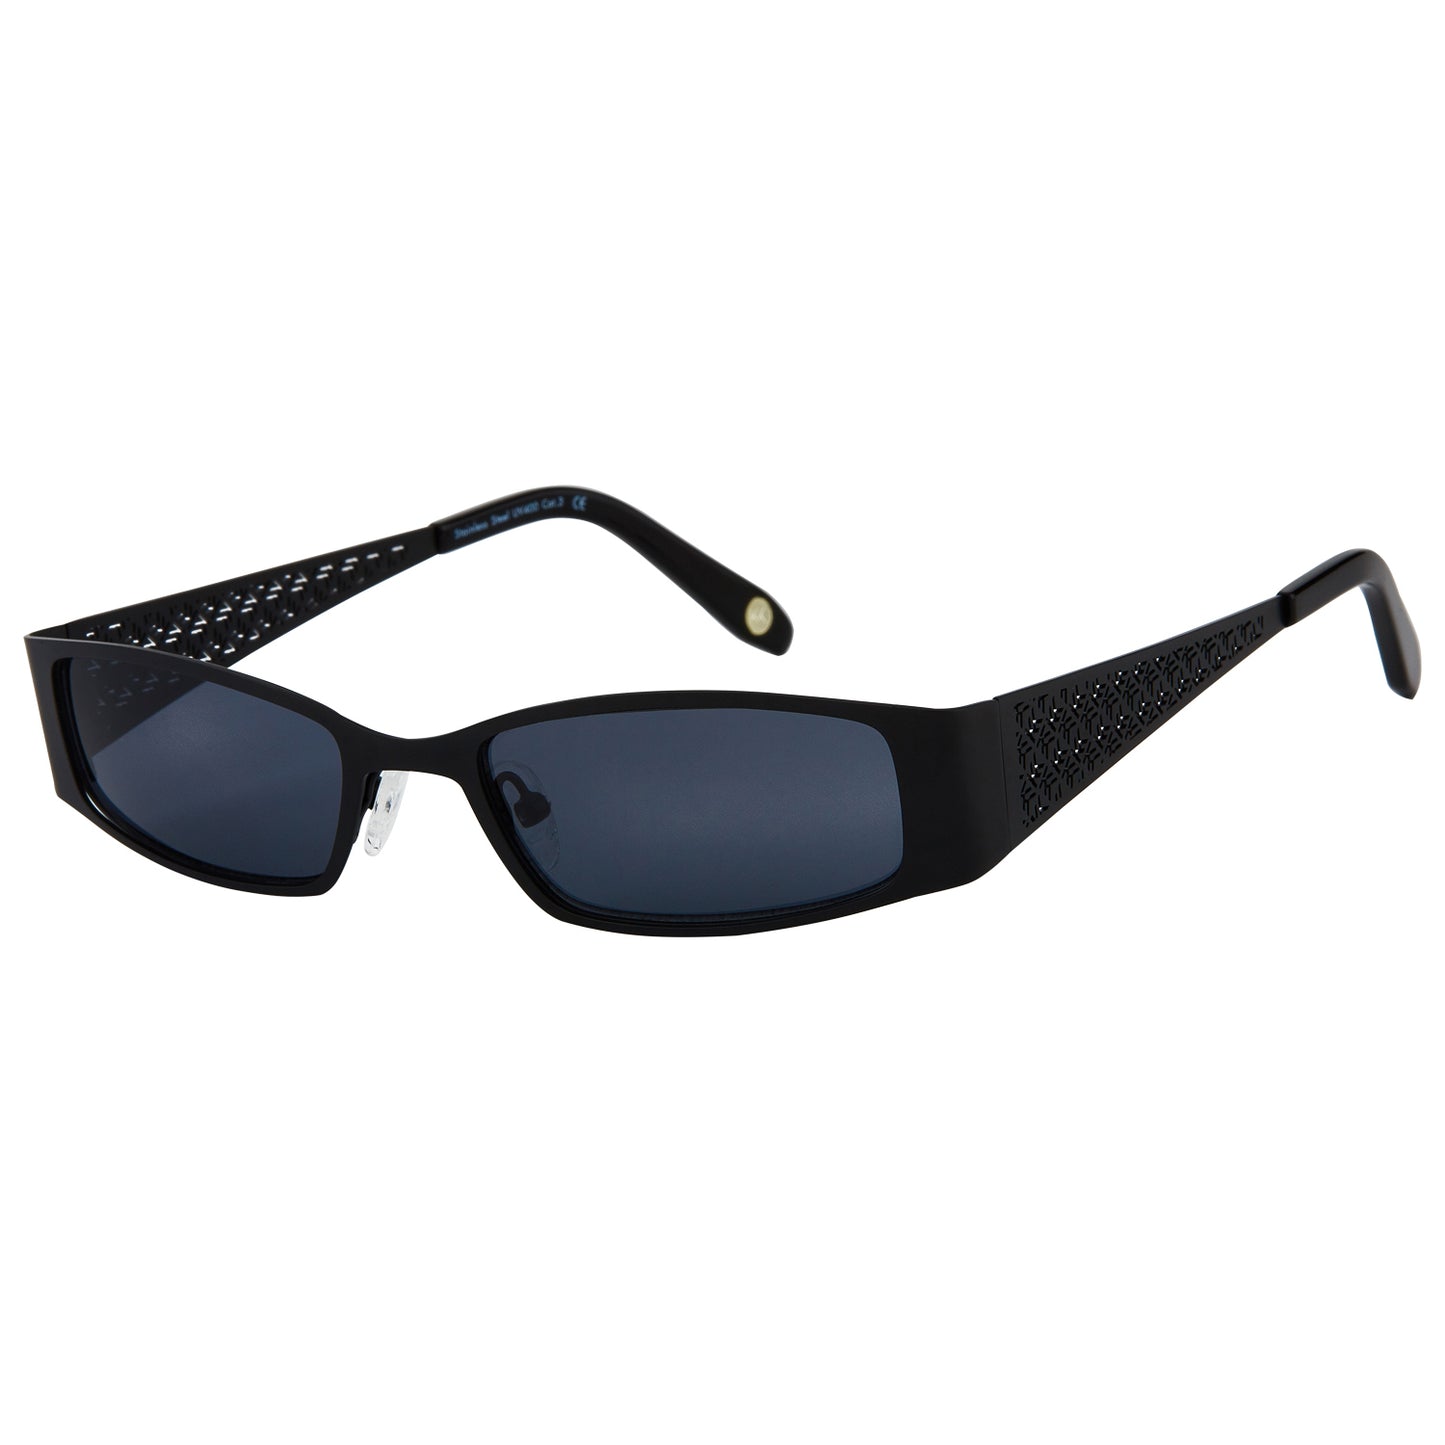 Mokki Slim Boss sunglasses in black